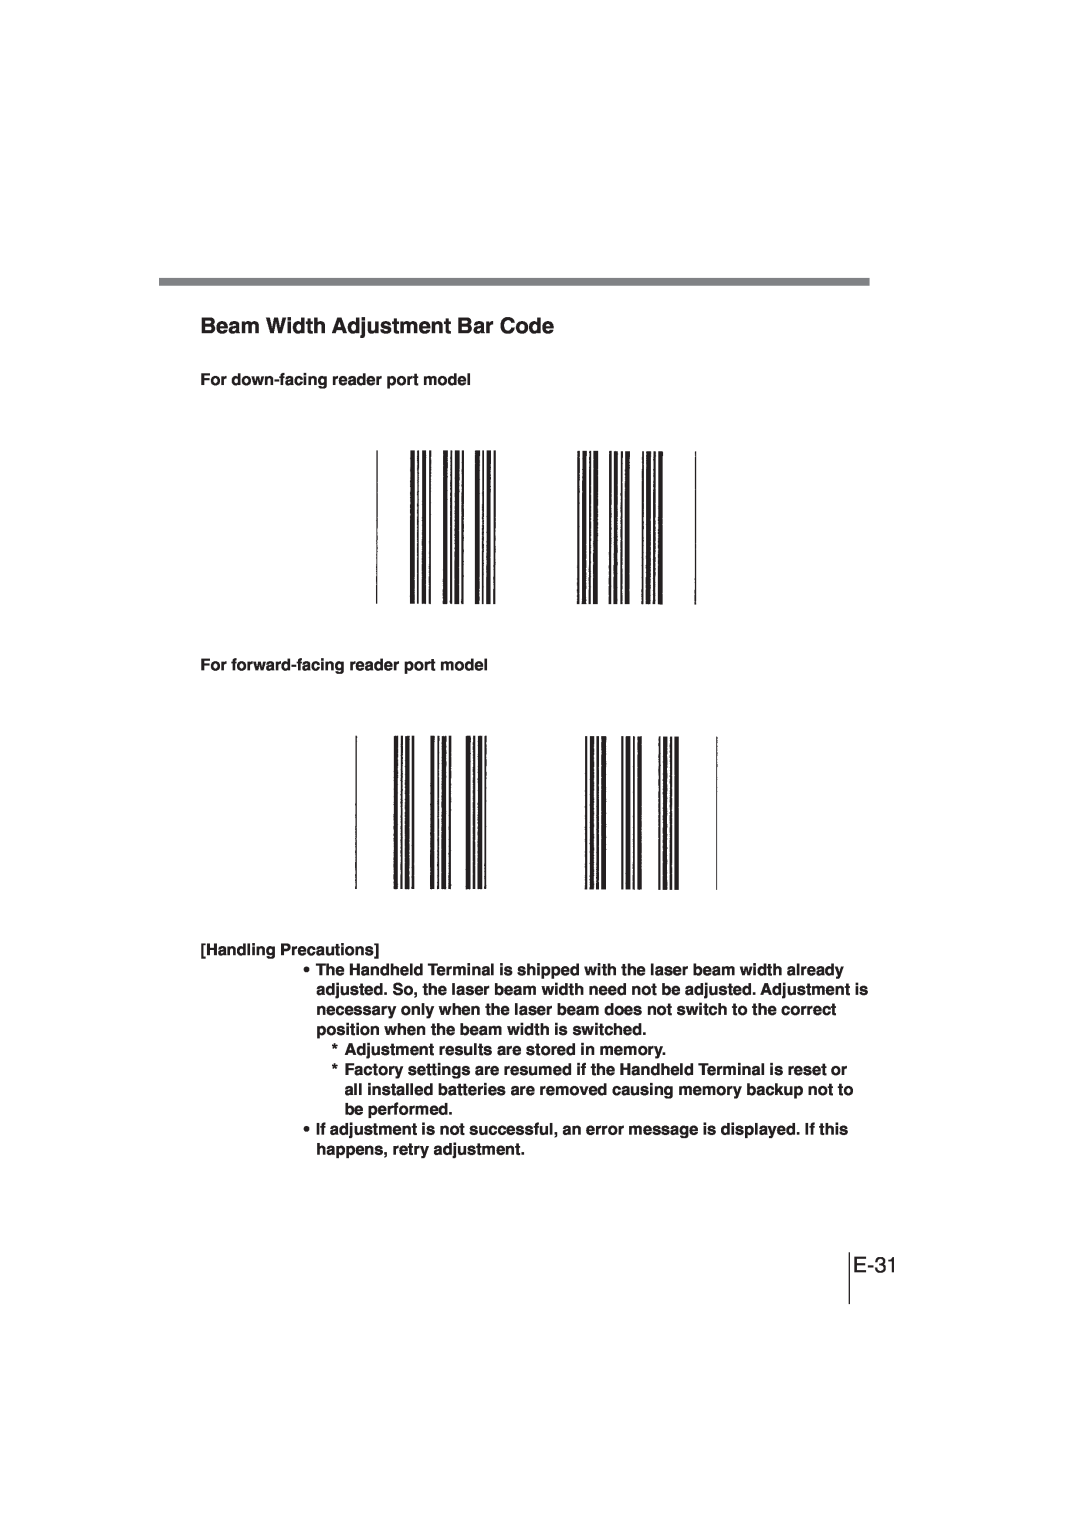 Casio DT-930 manual Beam Width Adjustment Bar Code, E-31 